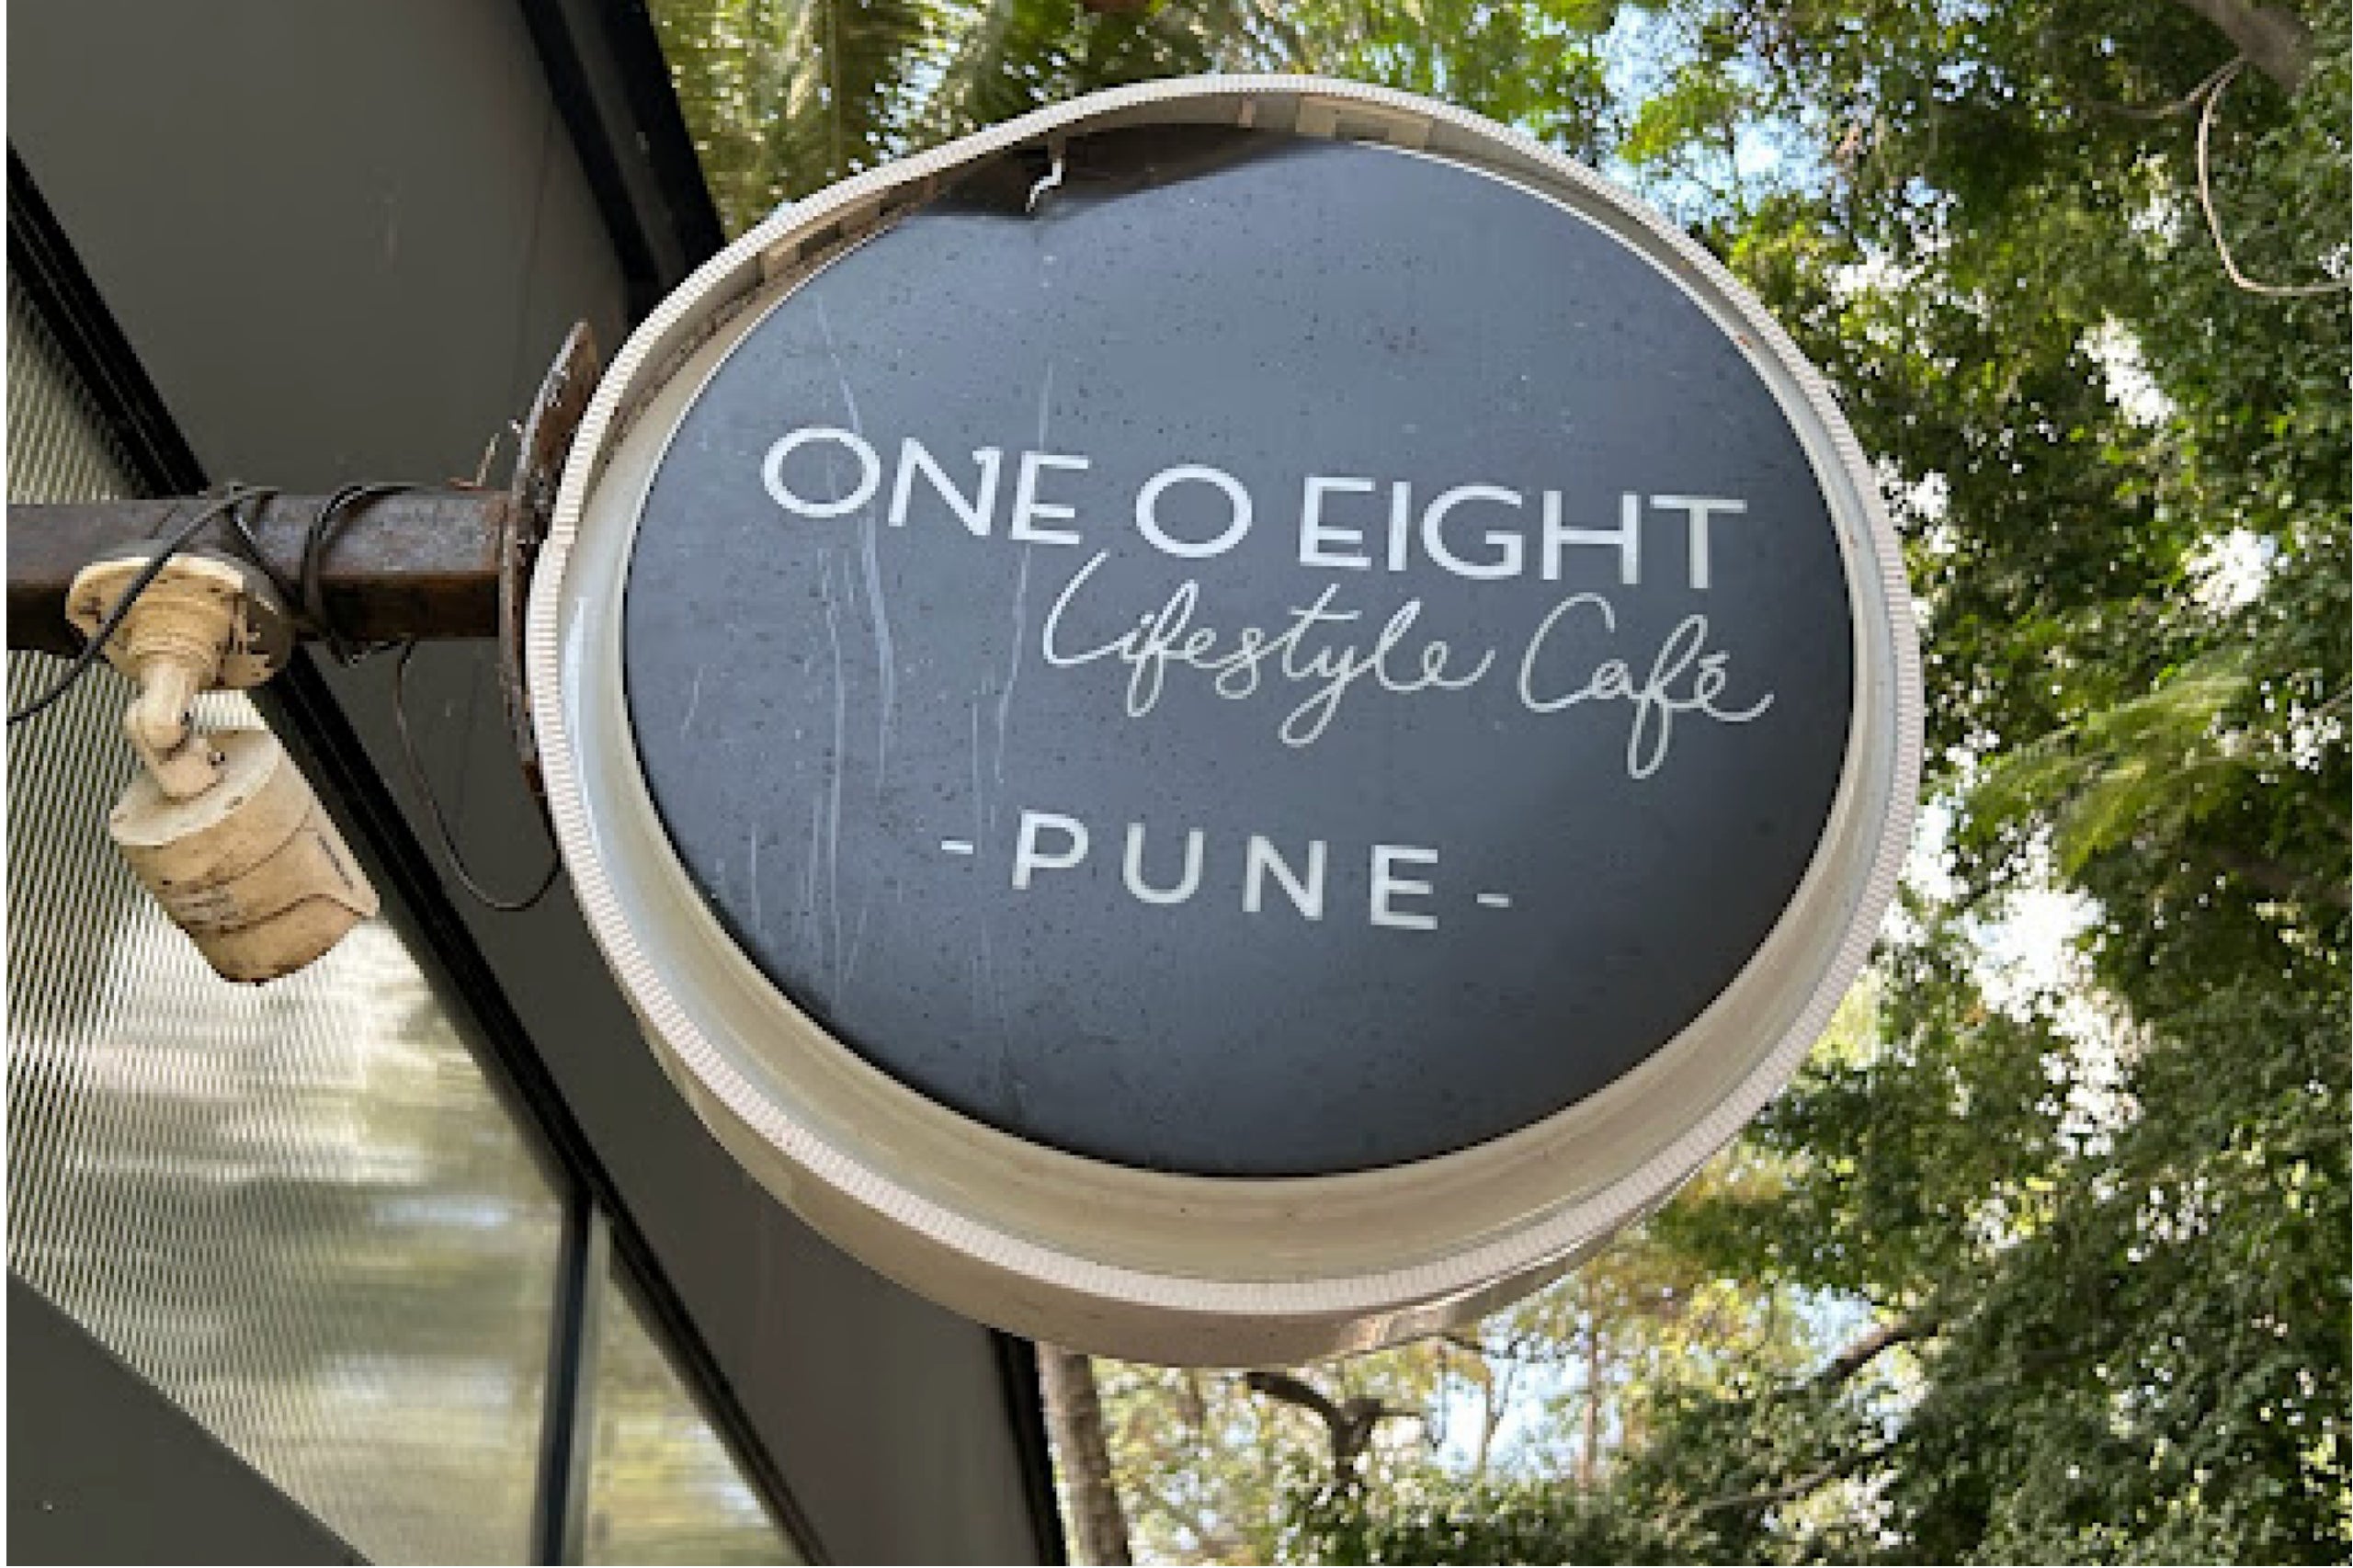 One O Eight Lifestyle Cafe